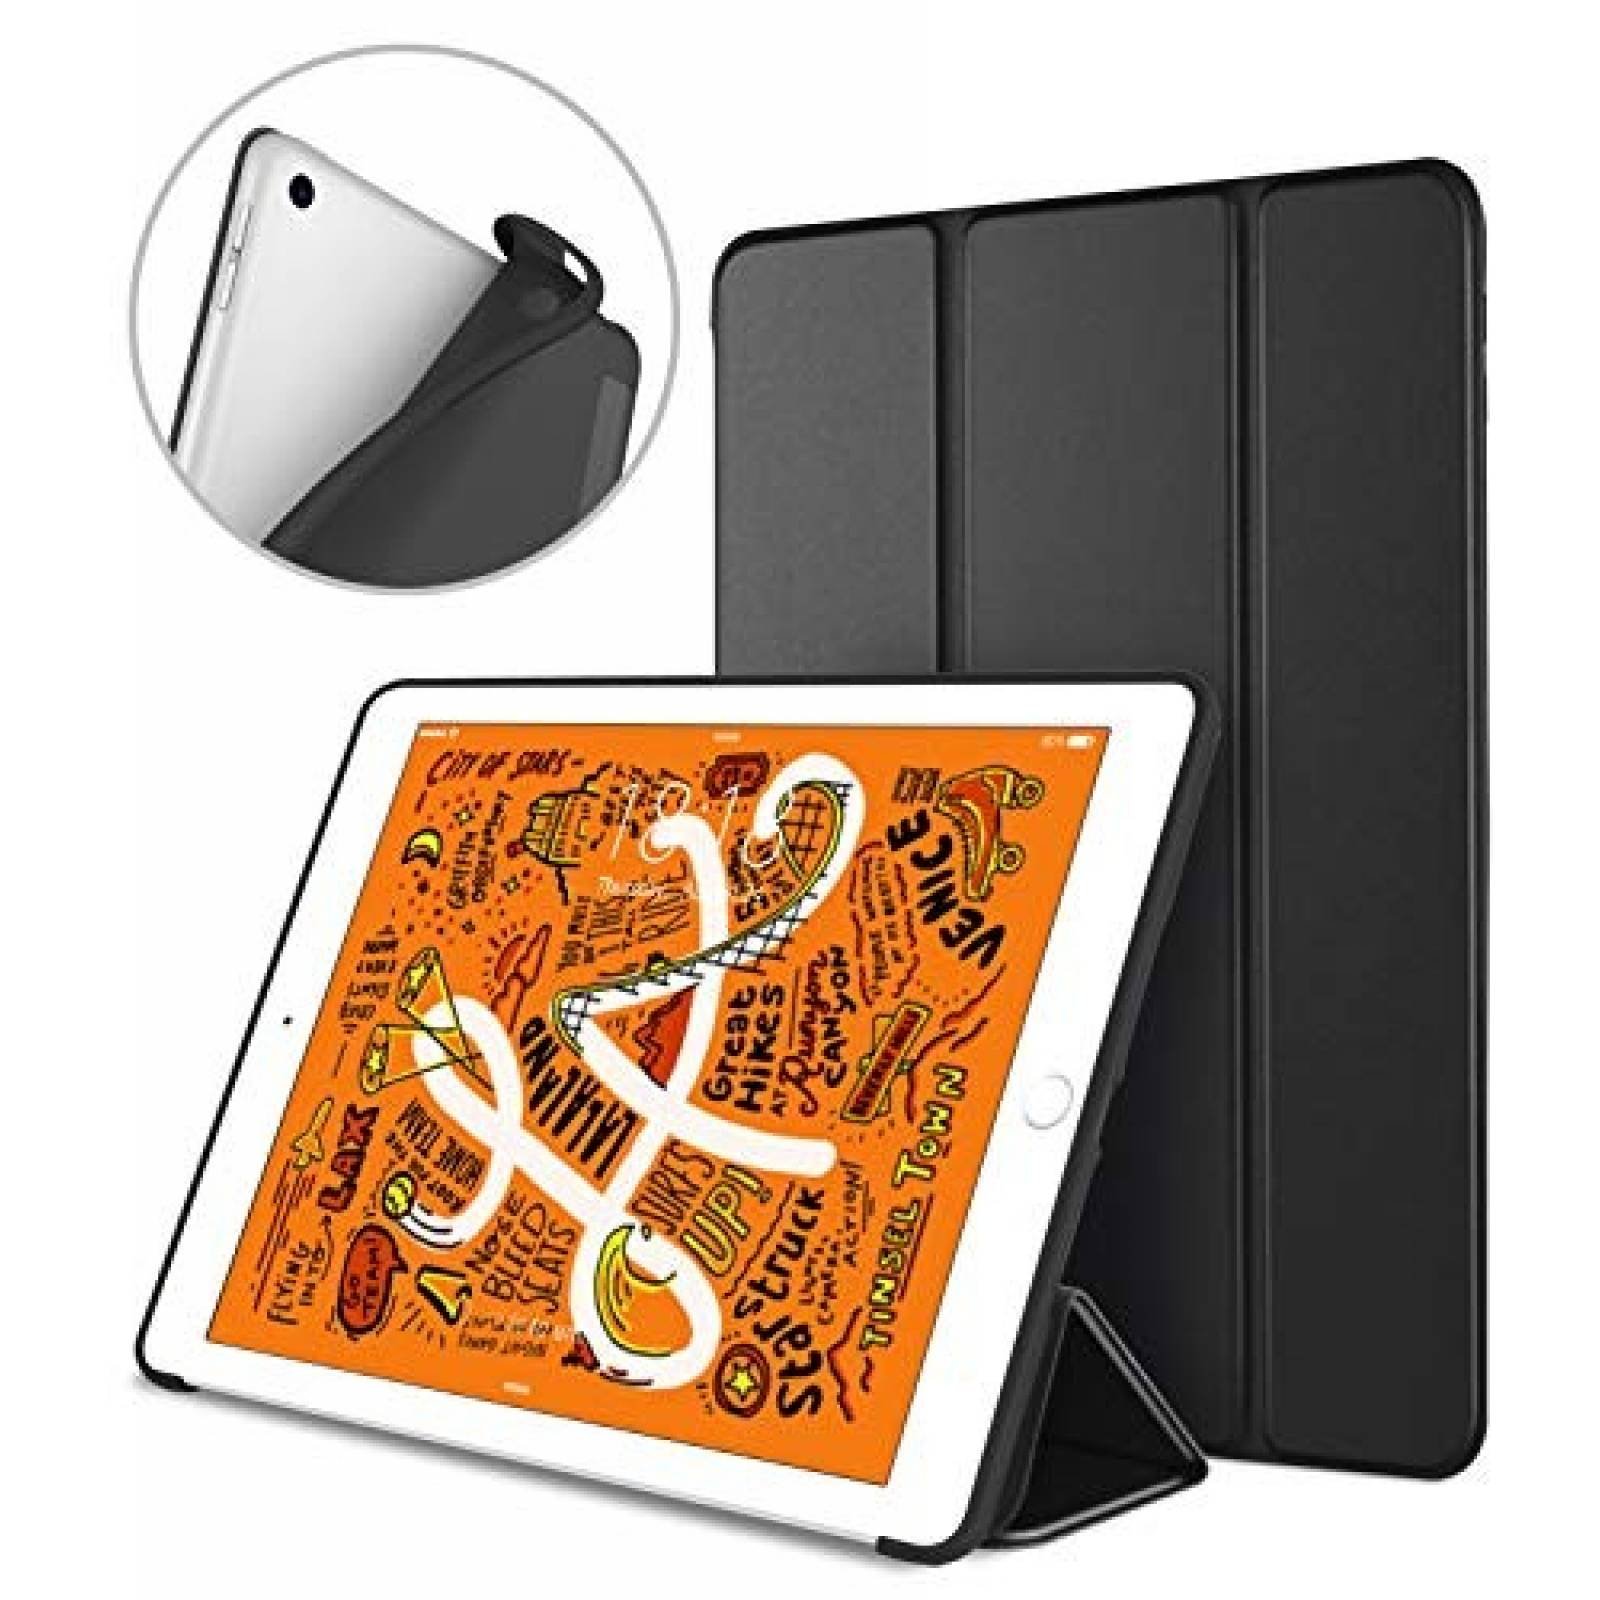 Funda DTTO para iPad Mini 5th Gen con Autobloqueo -Negro